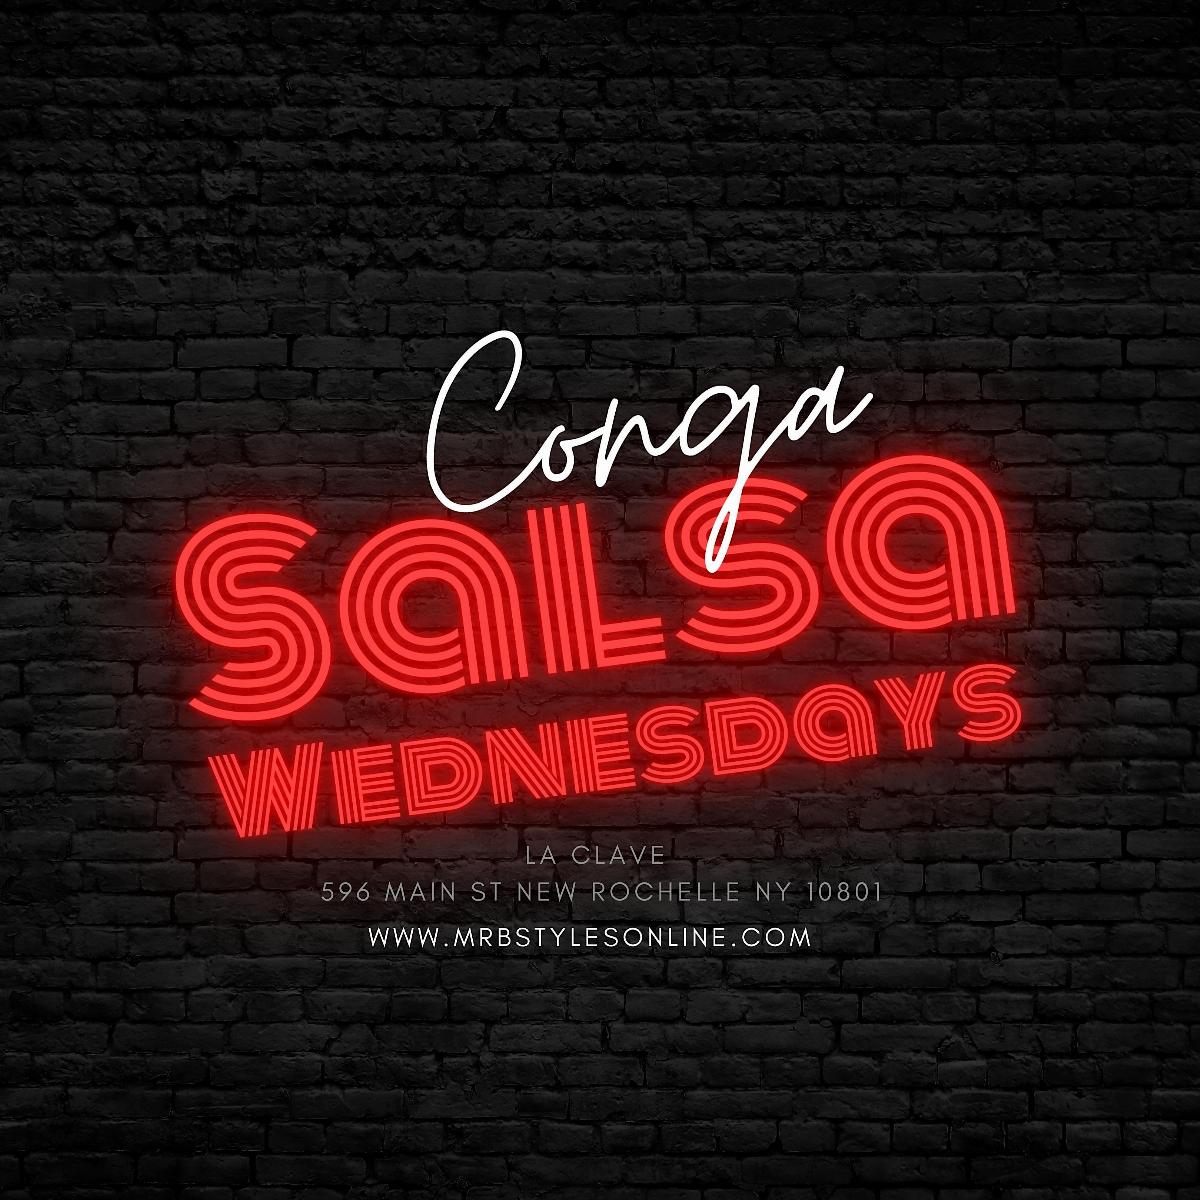 Conga Salsa Wednesdays